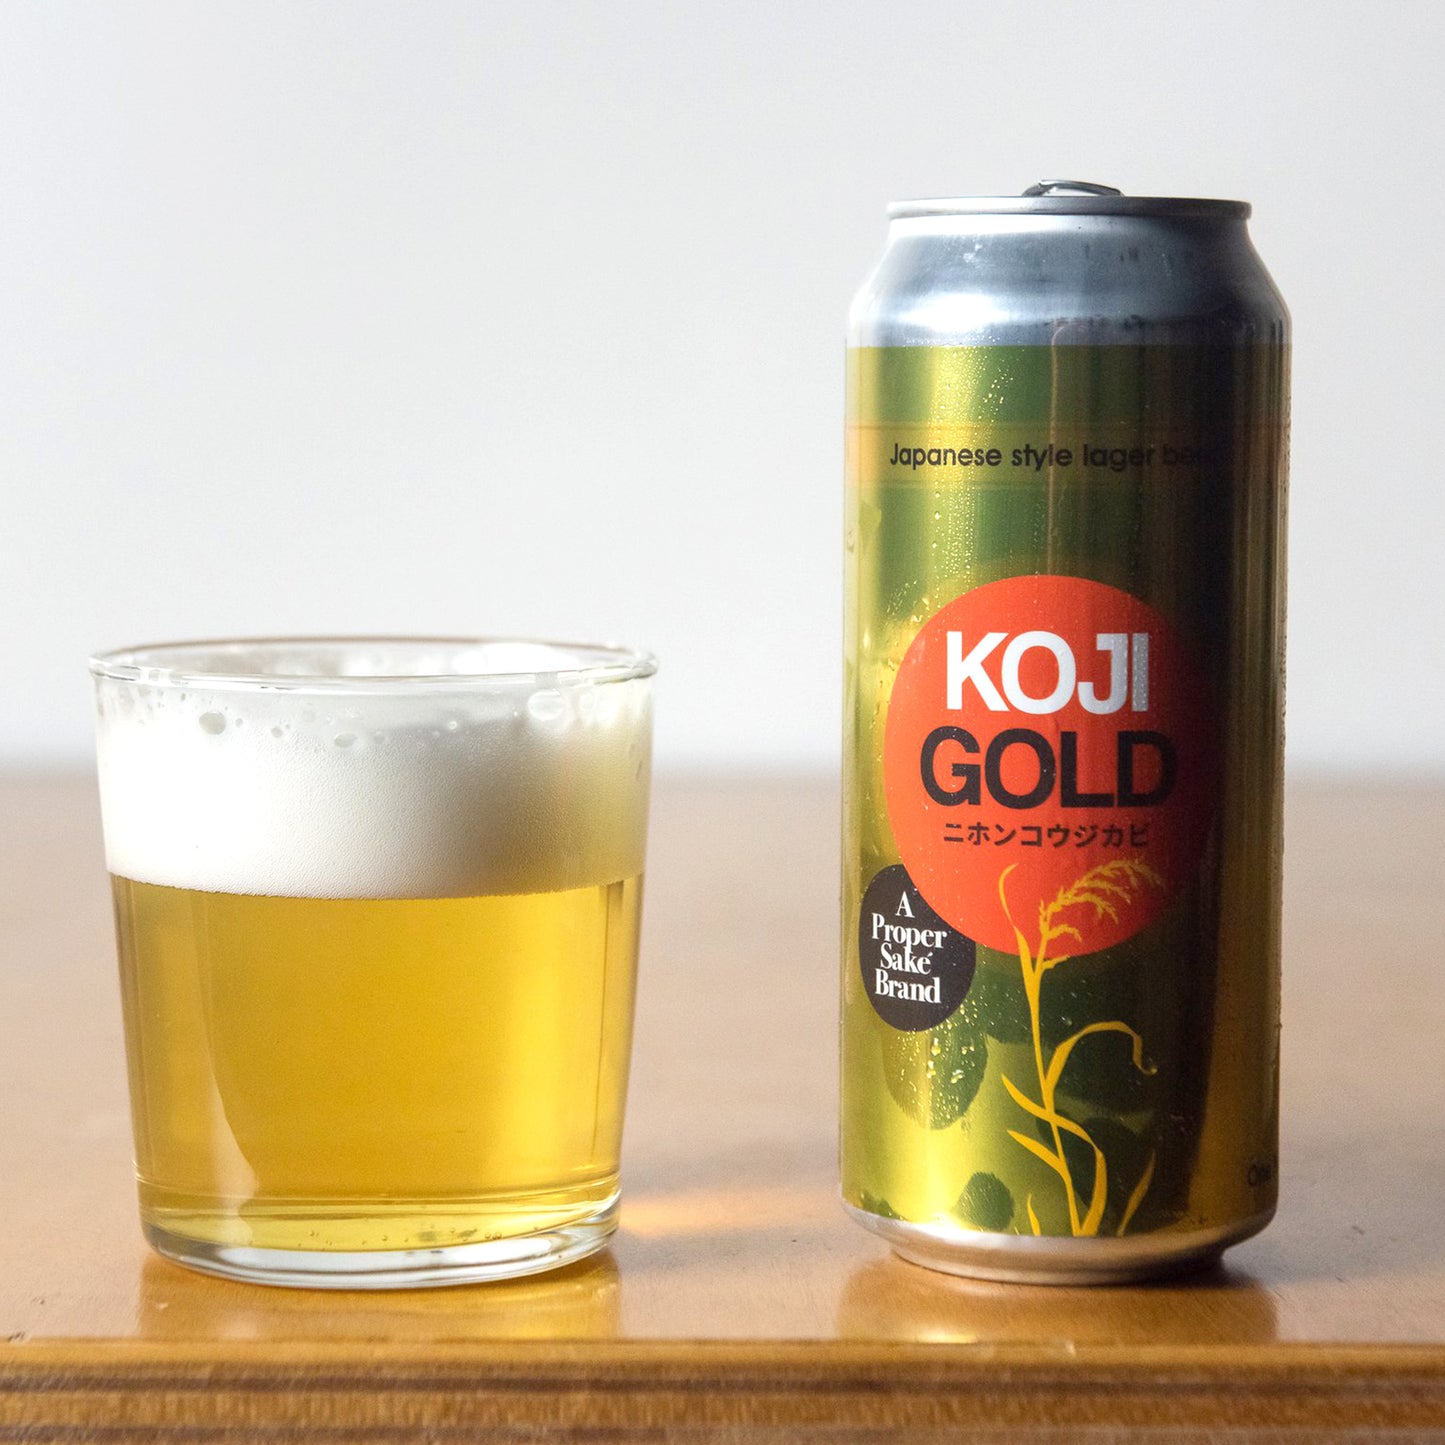 Koji Gold Lager Case of 24 -16 oz cans